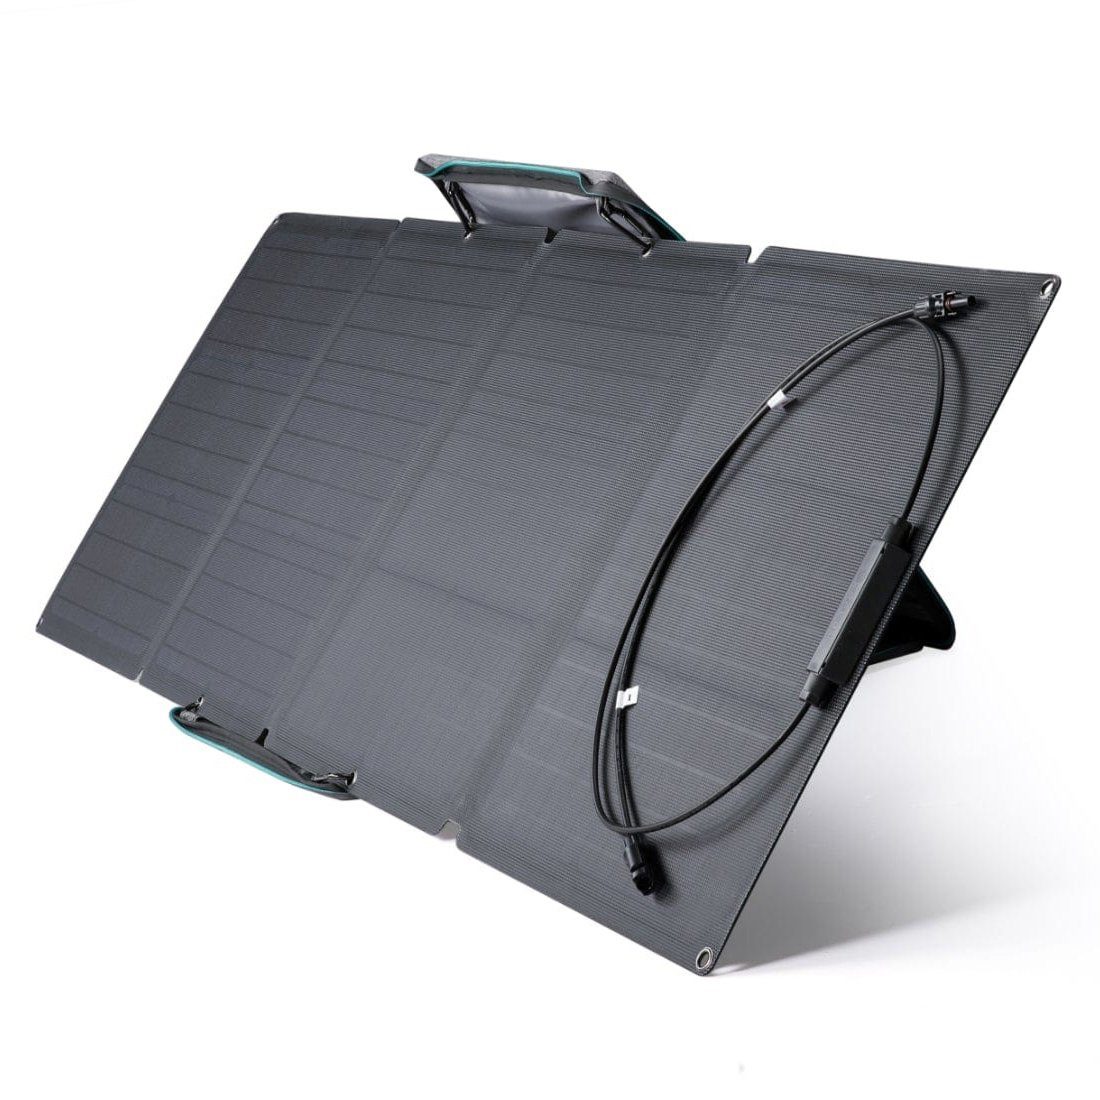 River Powerstation 2 Max mit Ecoflow Ecoflow Smart-Home-Station 110W Solarpanel